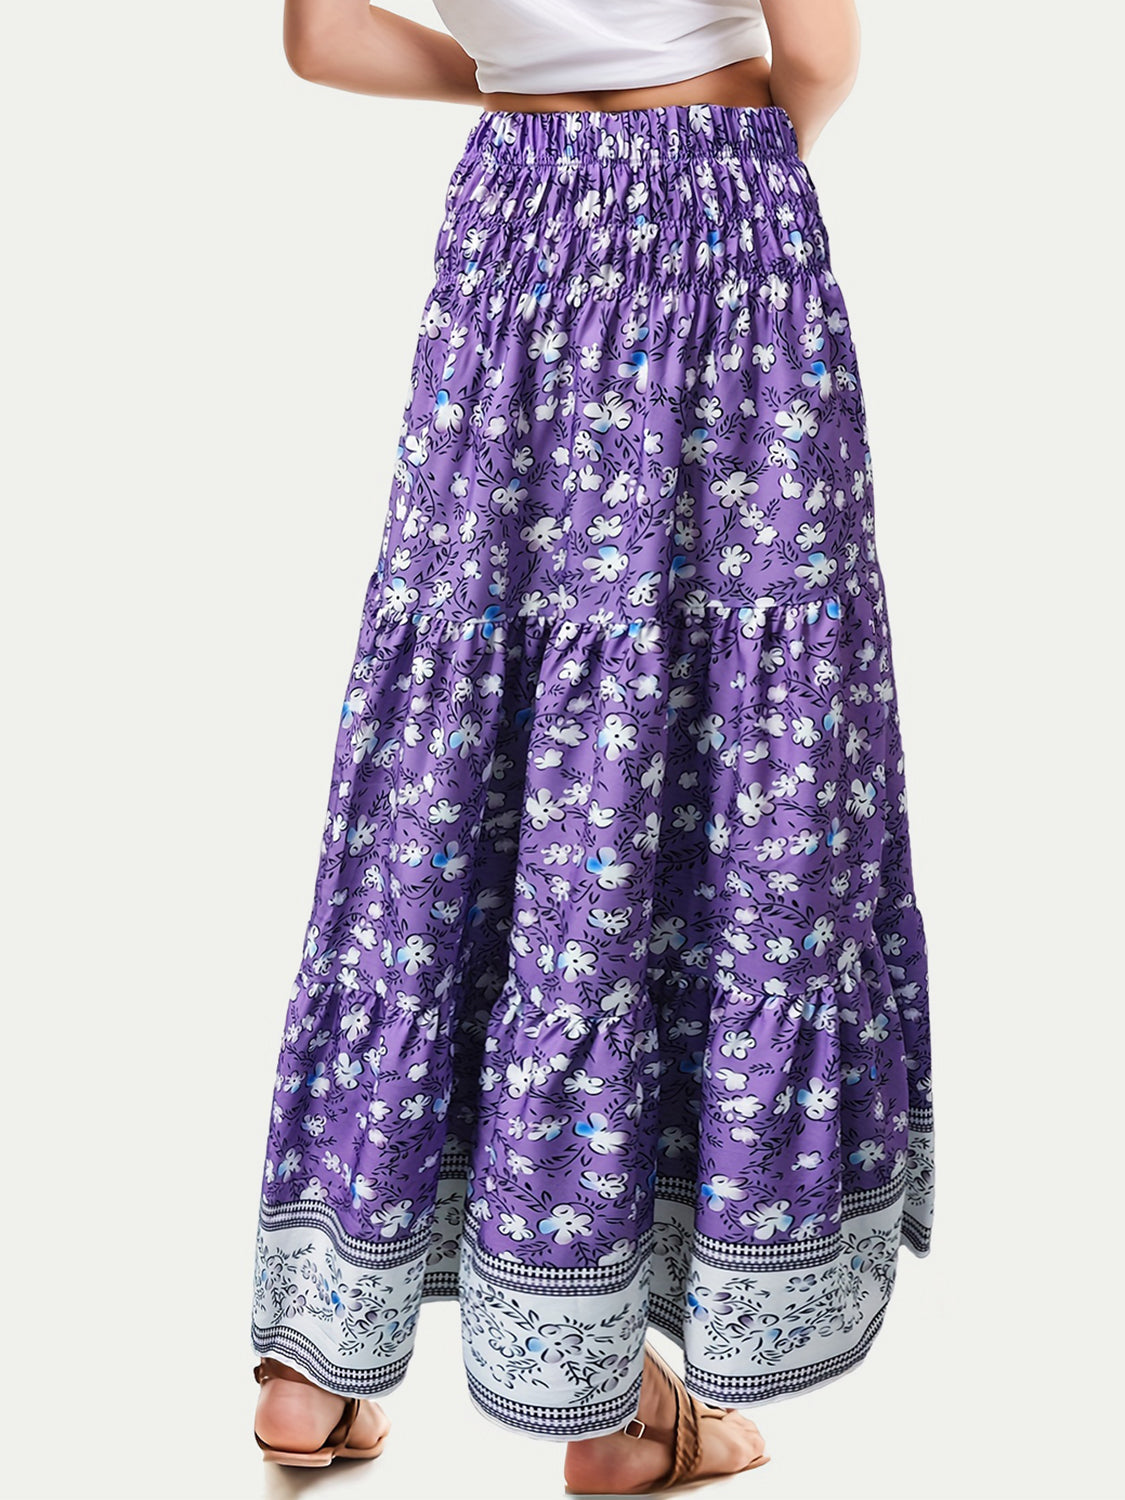 Purple bohemian skirt with comfortable waistband